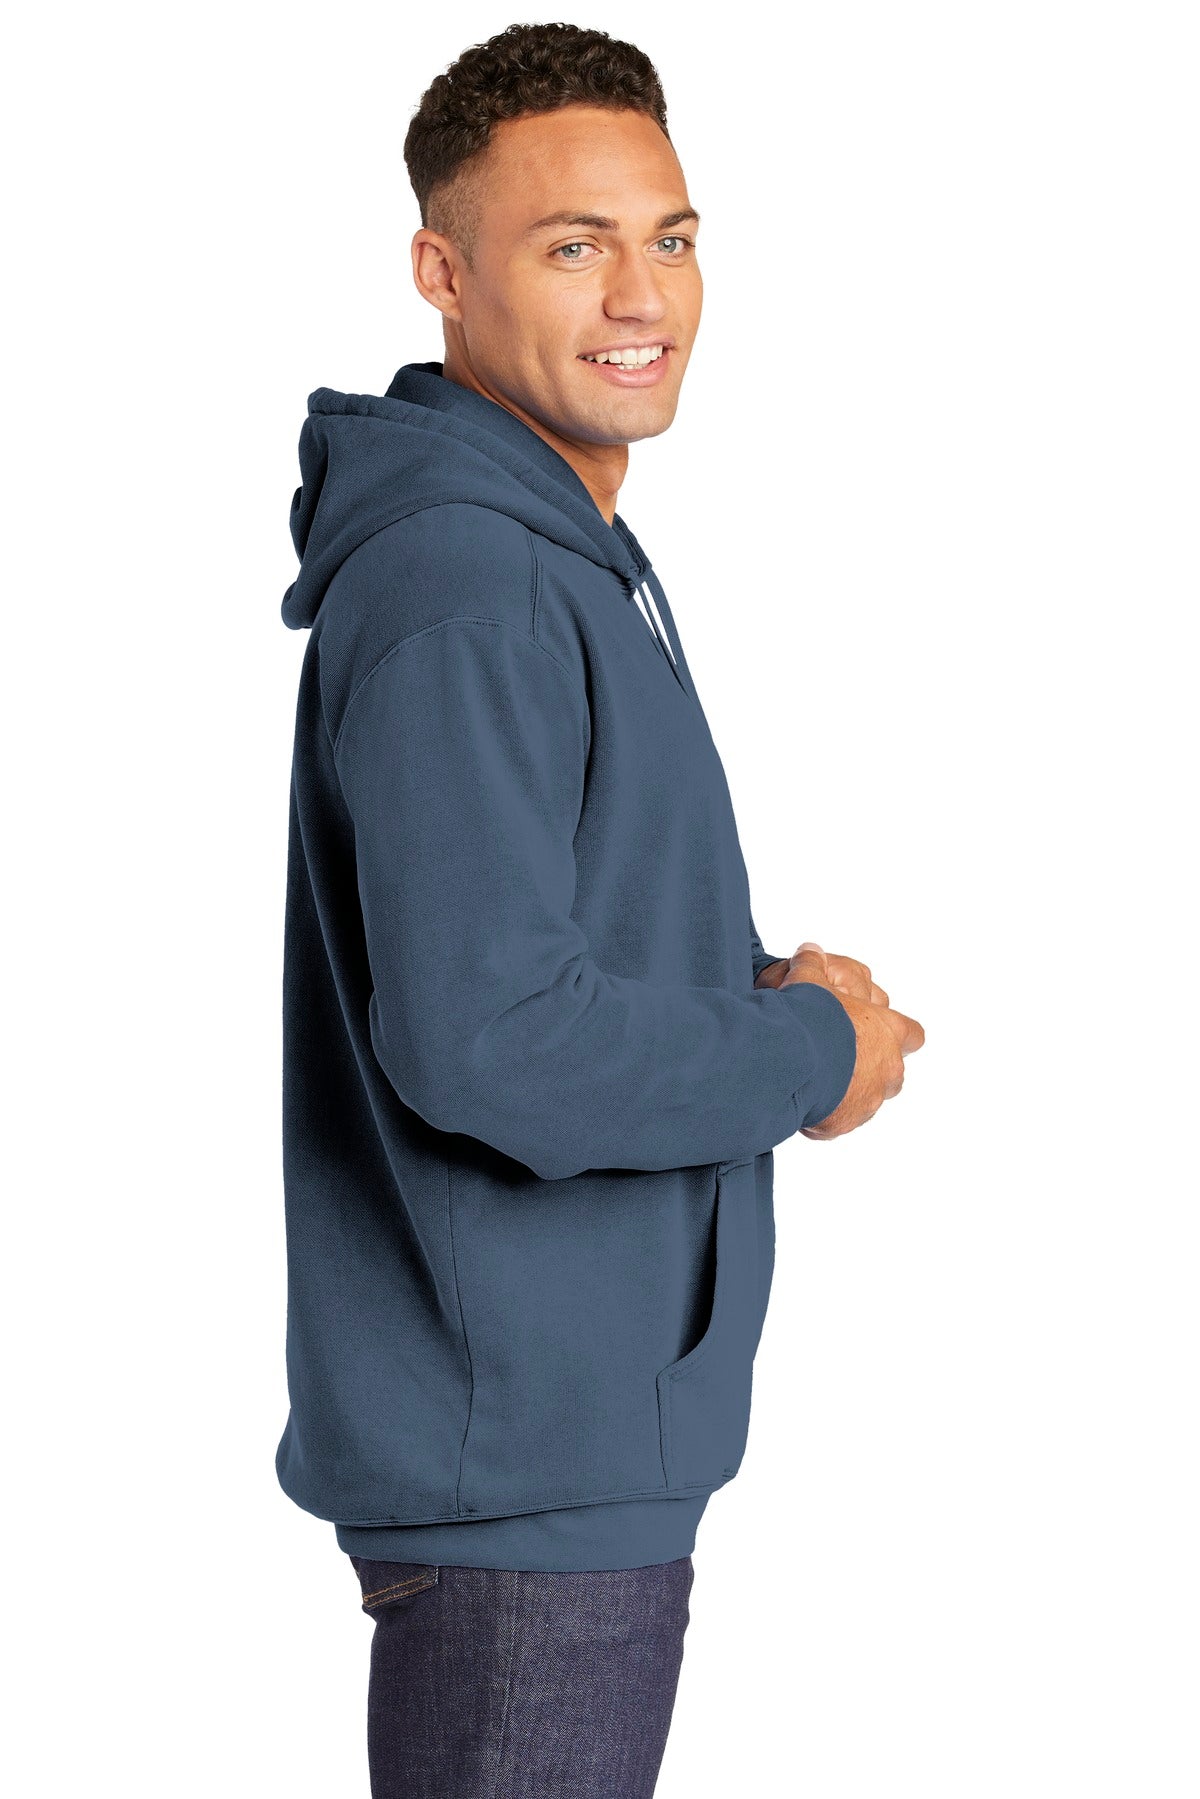 COMFORT COLORS Ring Spun Hooded Sweatshirt. 1567 - BT Imprintables Shirts